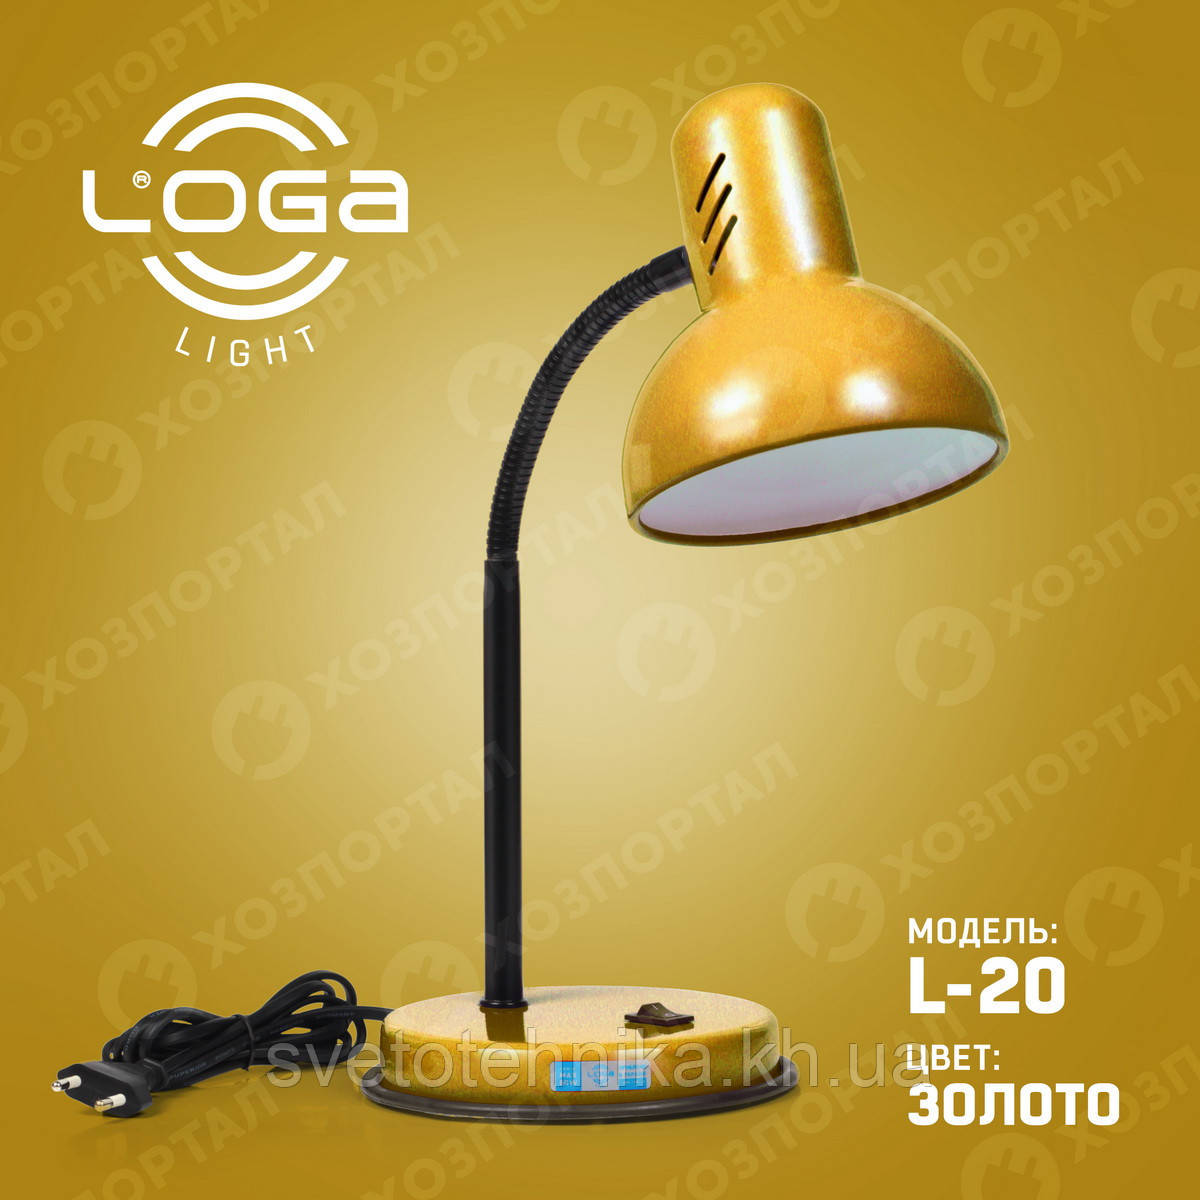 Лампа настільна "Золото". Україна. (ТМ LOGA ® Light)